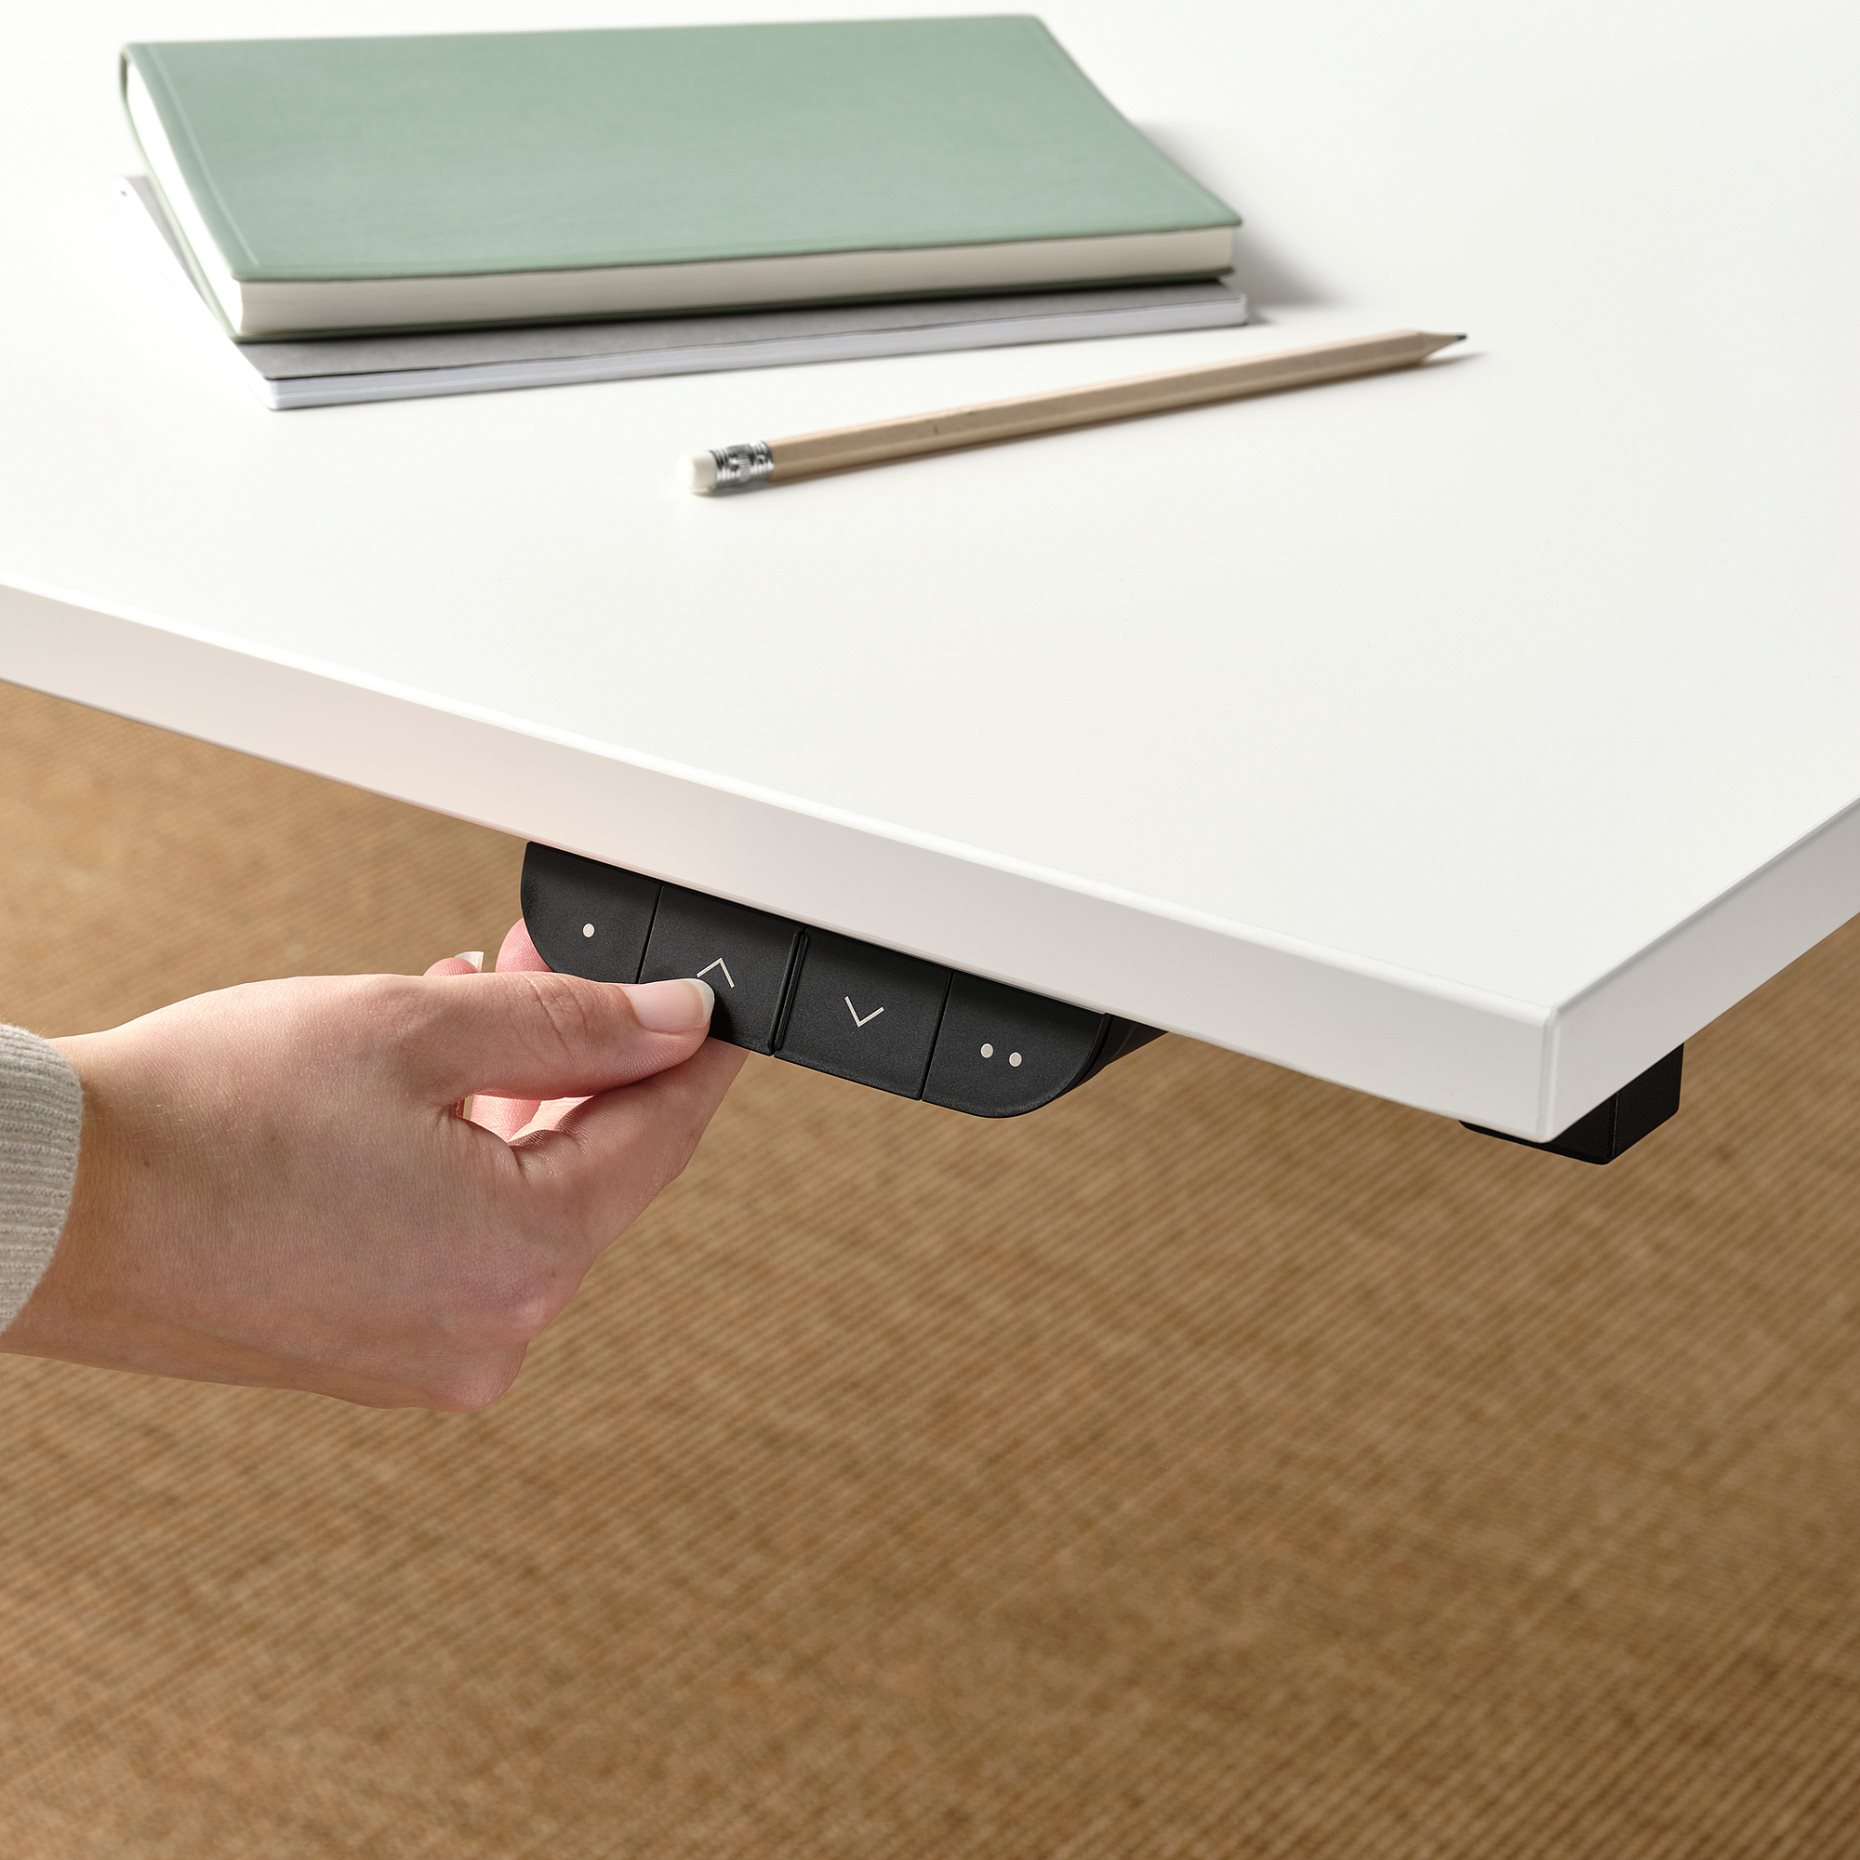 MITTZON, desk sit/stand/electric, 140x80 cm, 695.285.51